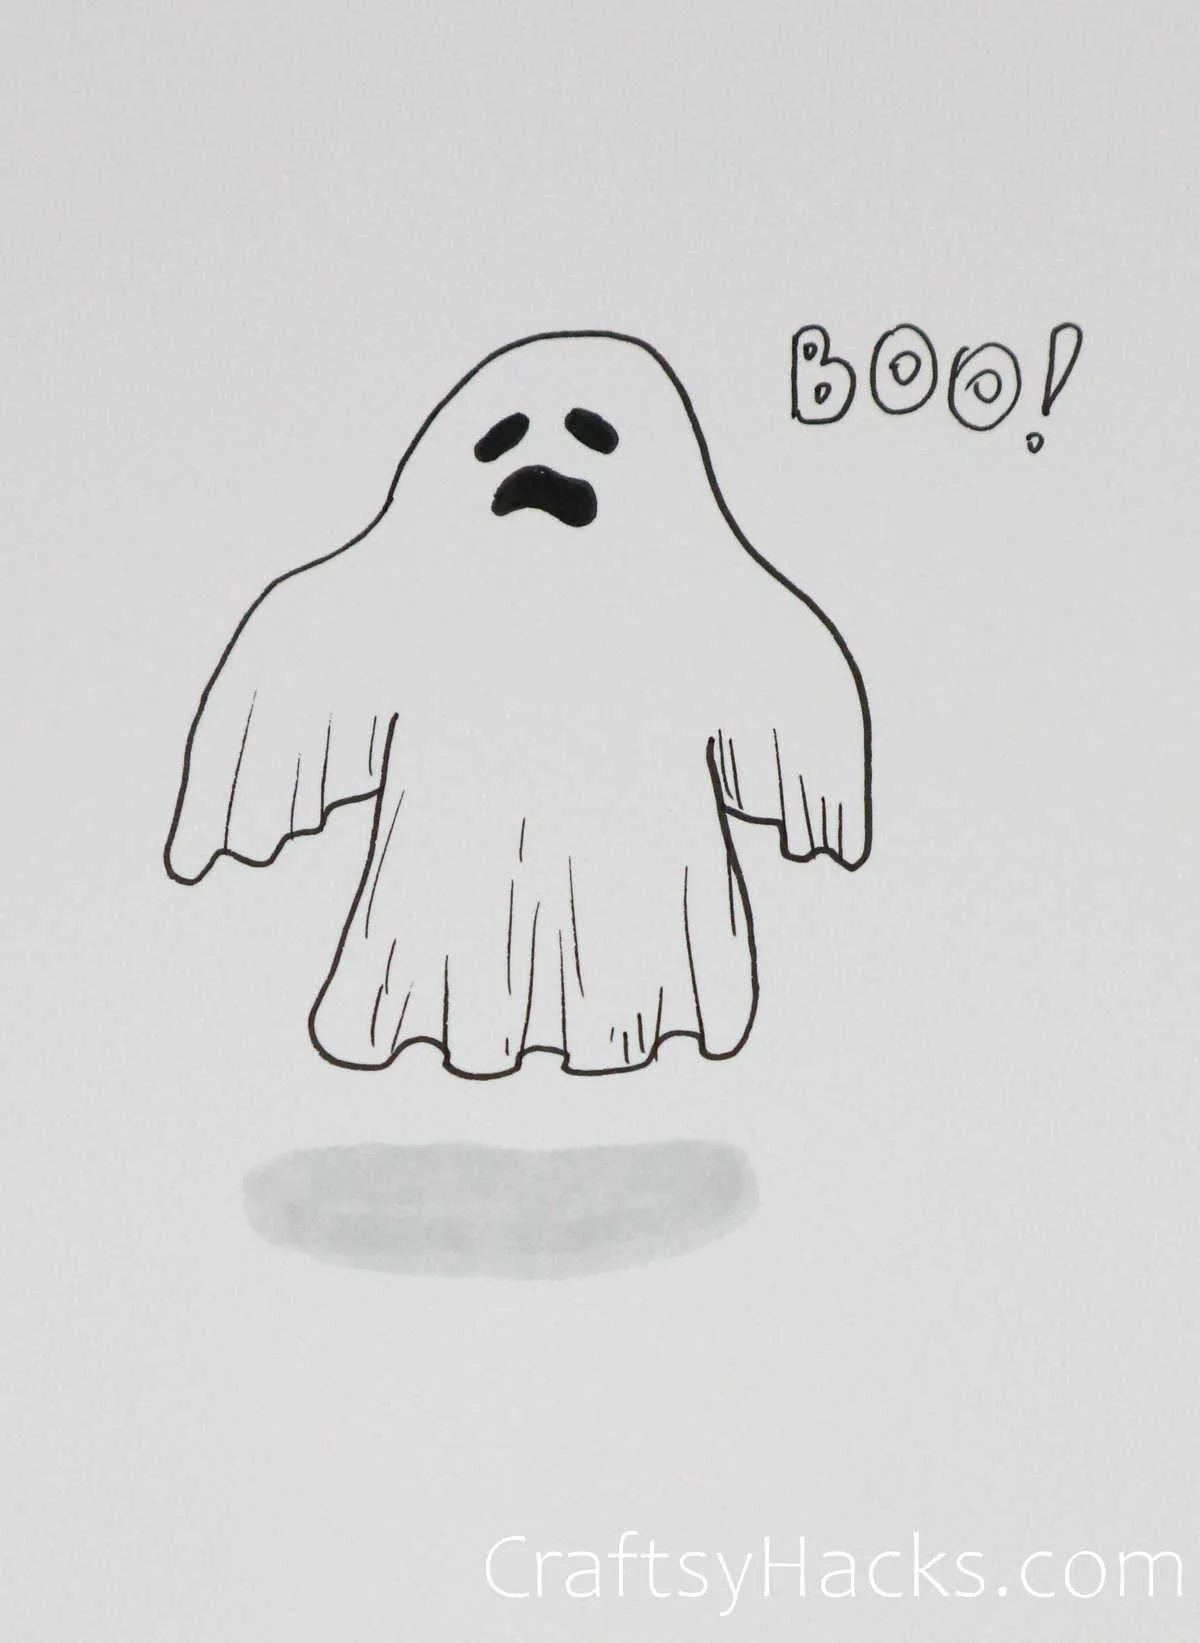 21 Spooky Halloween Drawing Ideas - Craftsy Hacks